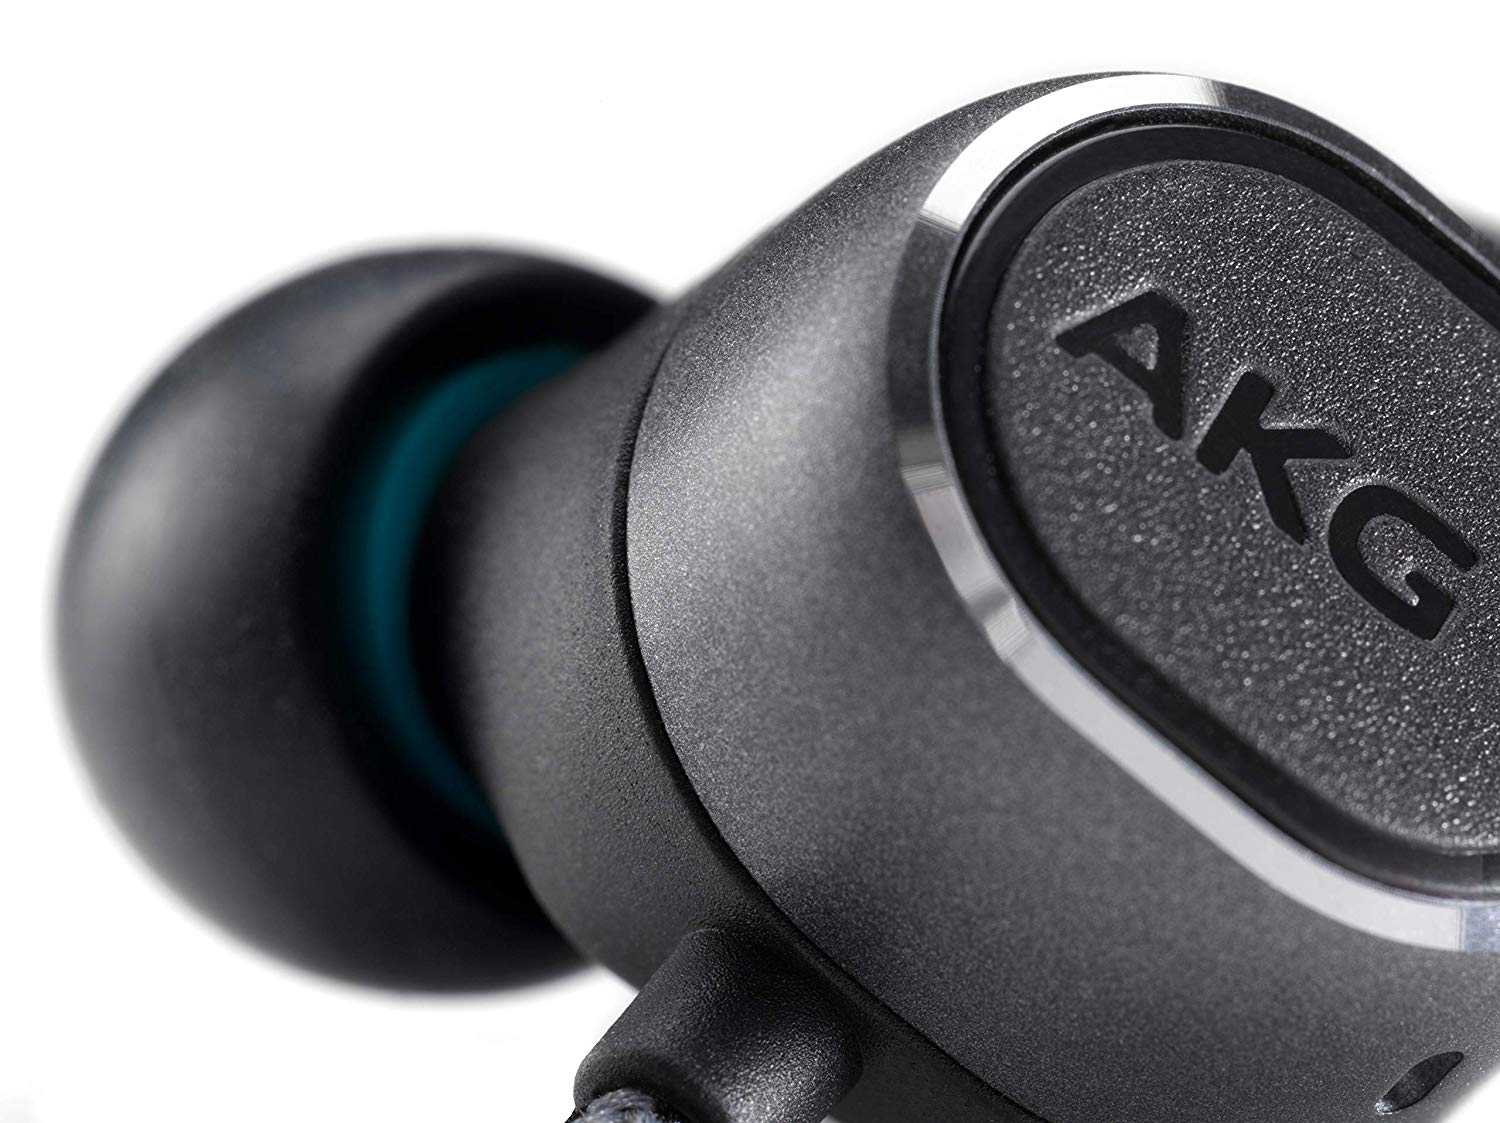 AKG N200 Wireless 綠色 藍牙 無線 耳道式耳機 | 金曲音響